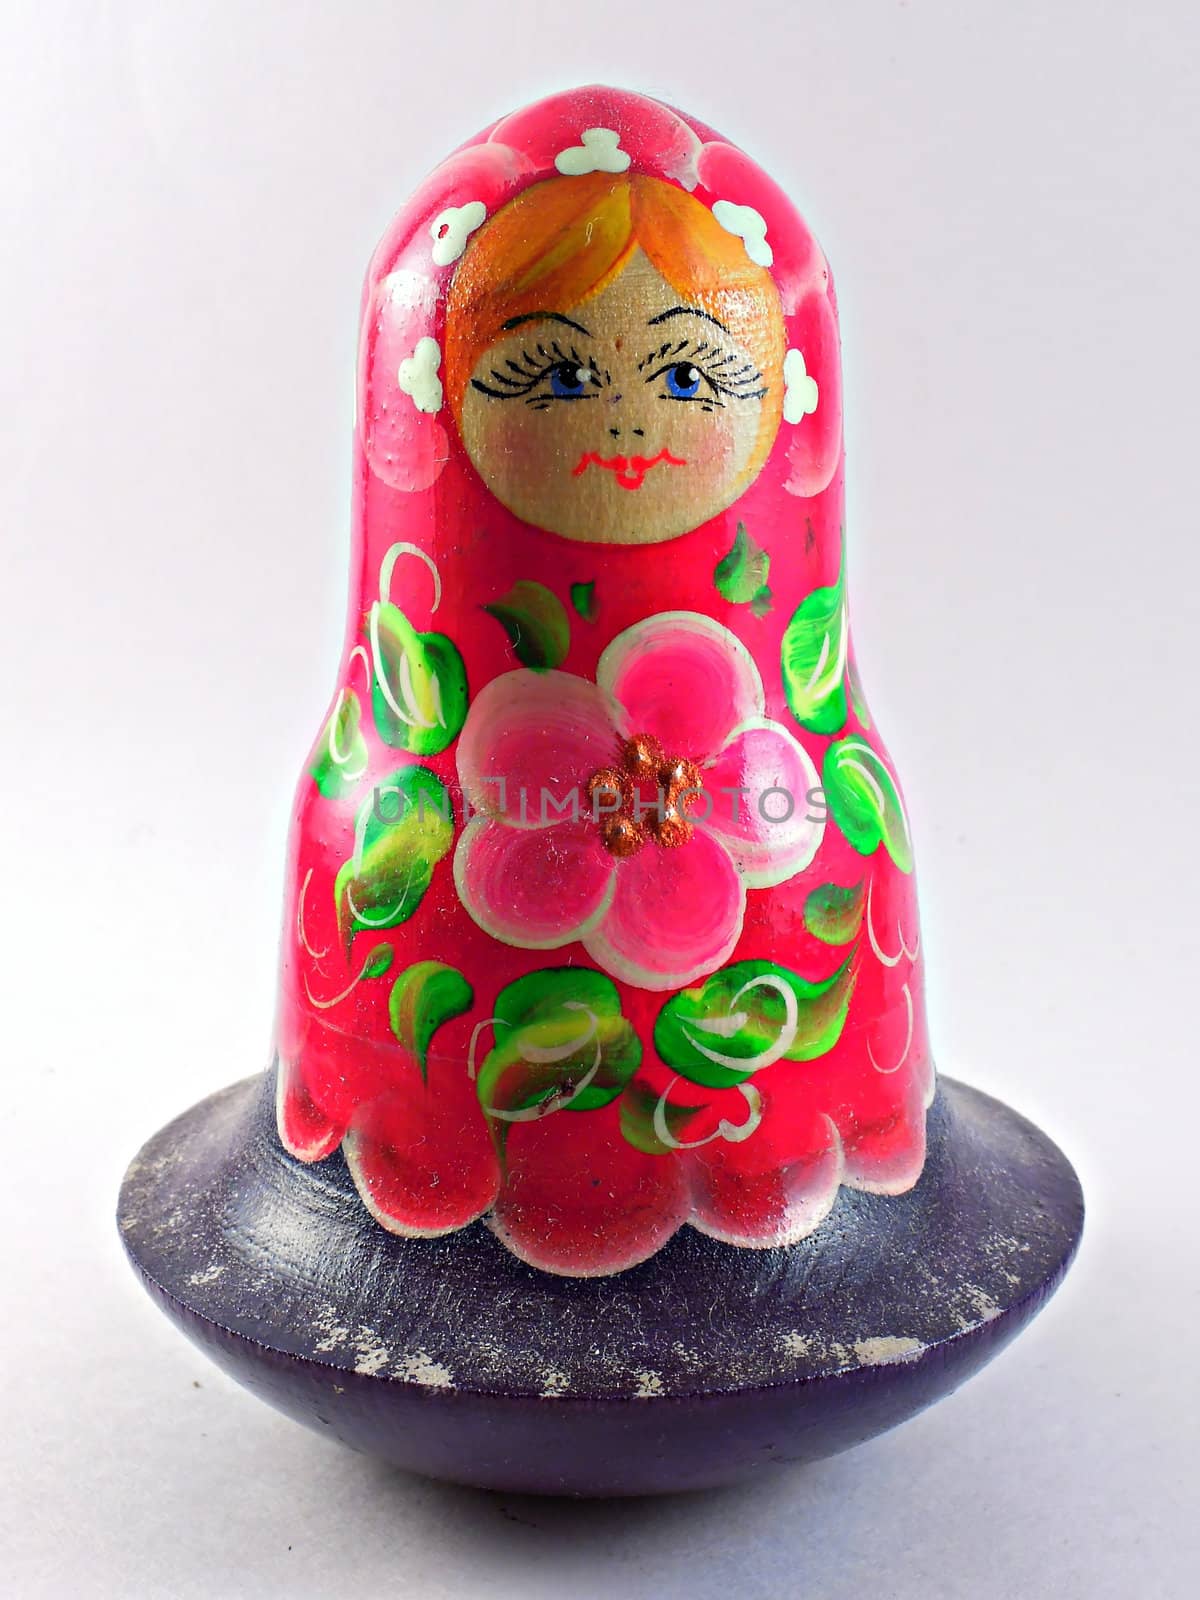 Russian doll by Picnichok